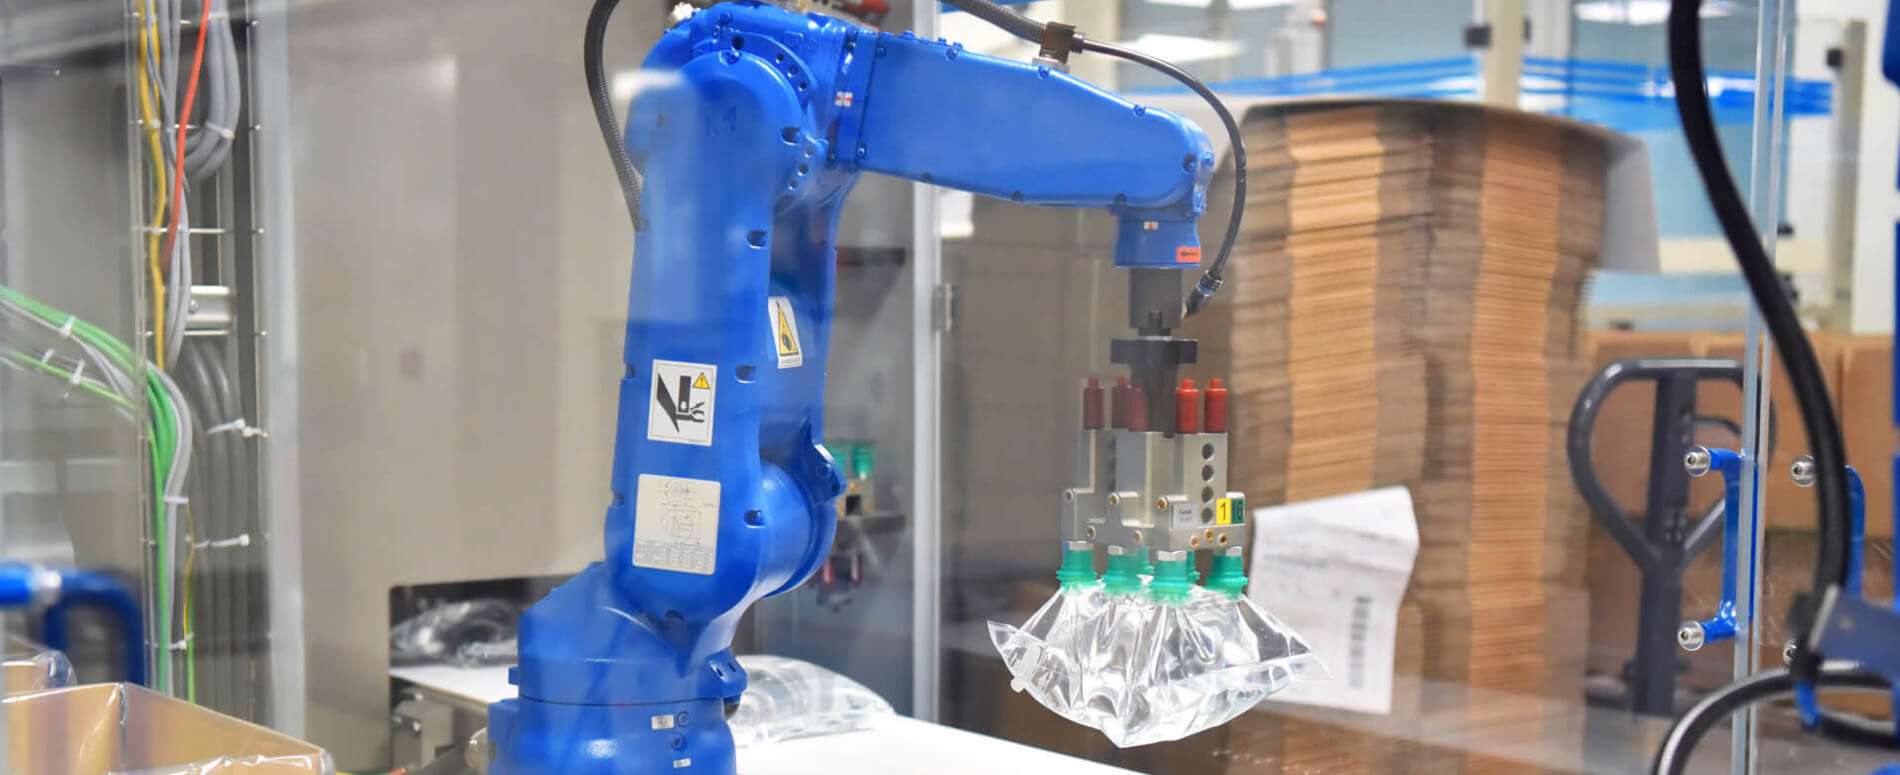 Roboter für Medizintechnik